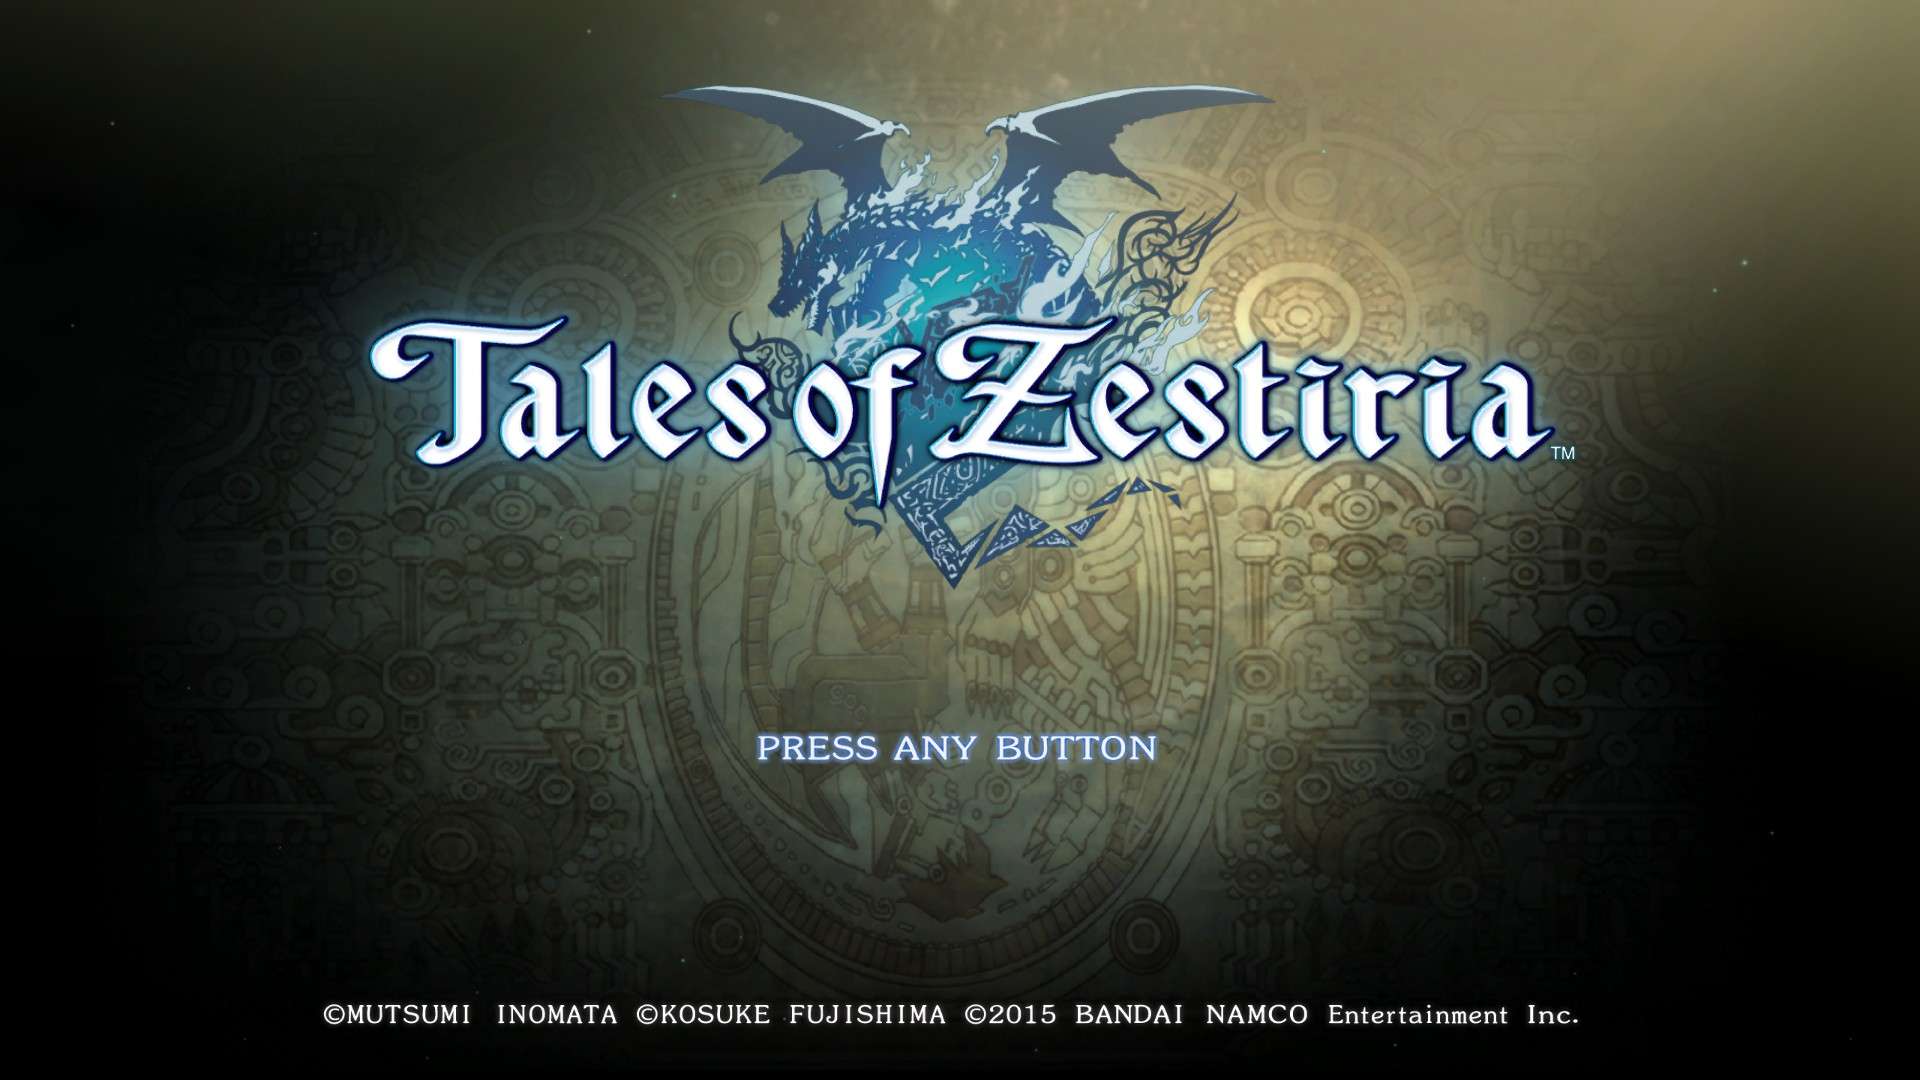 Tales of Zestiria, PC Steam Game